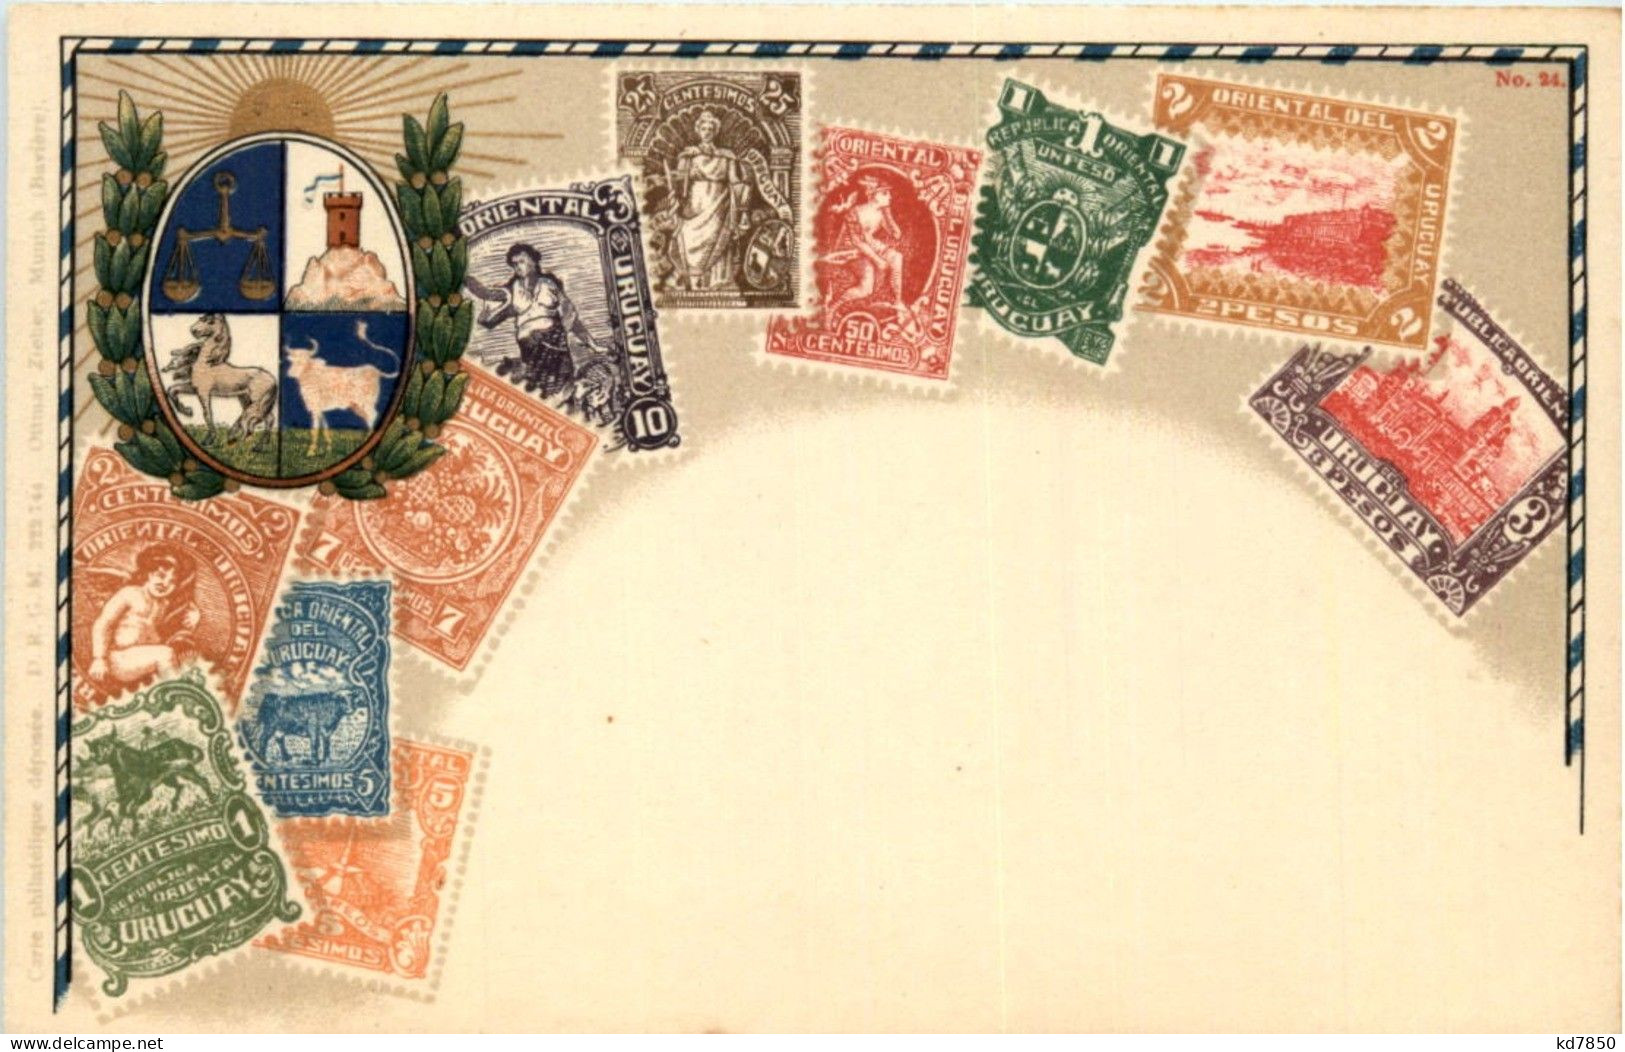 Uruquay - Briefmarken - Litho - Stamps (pictures)